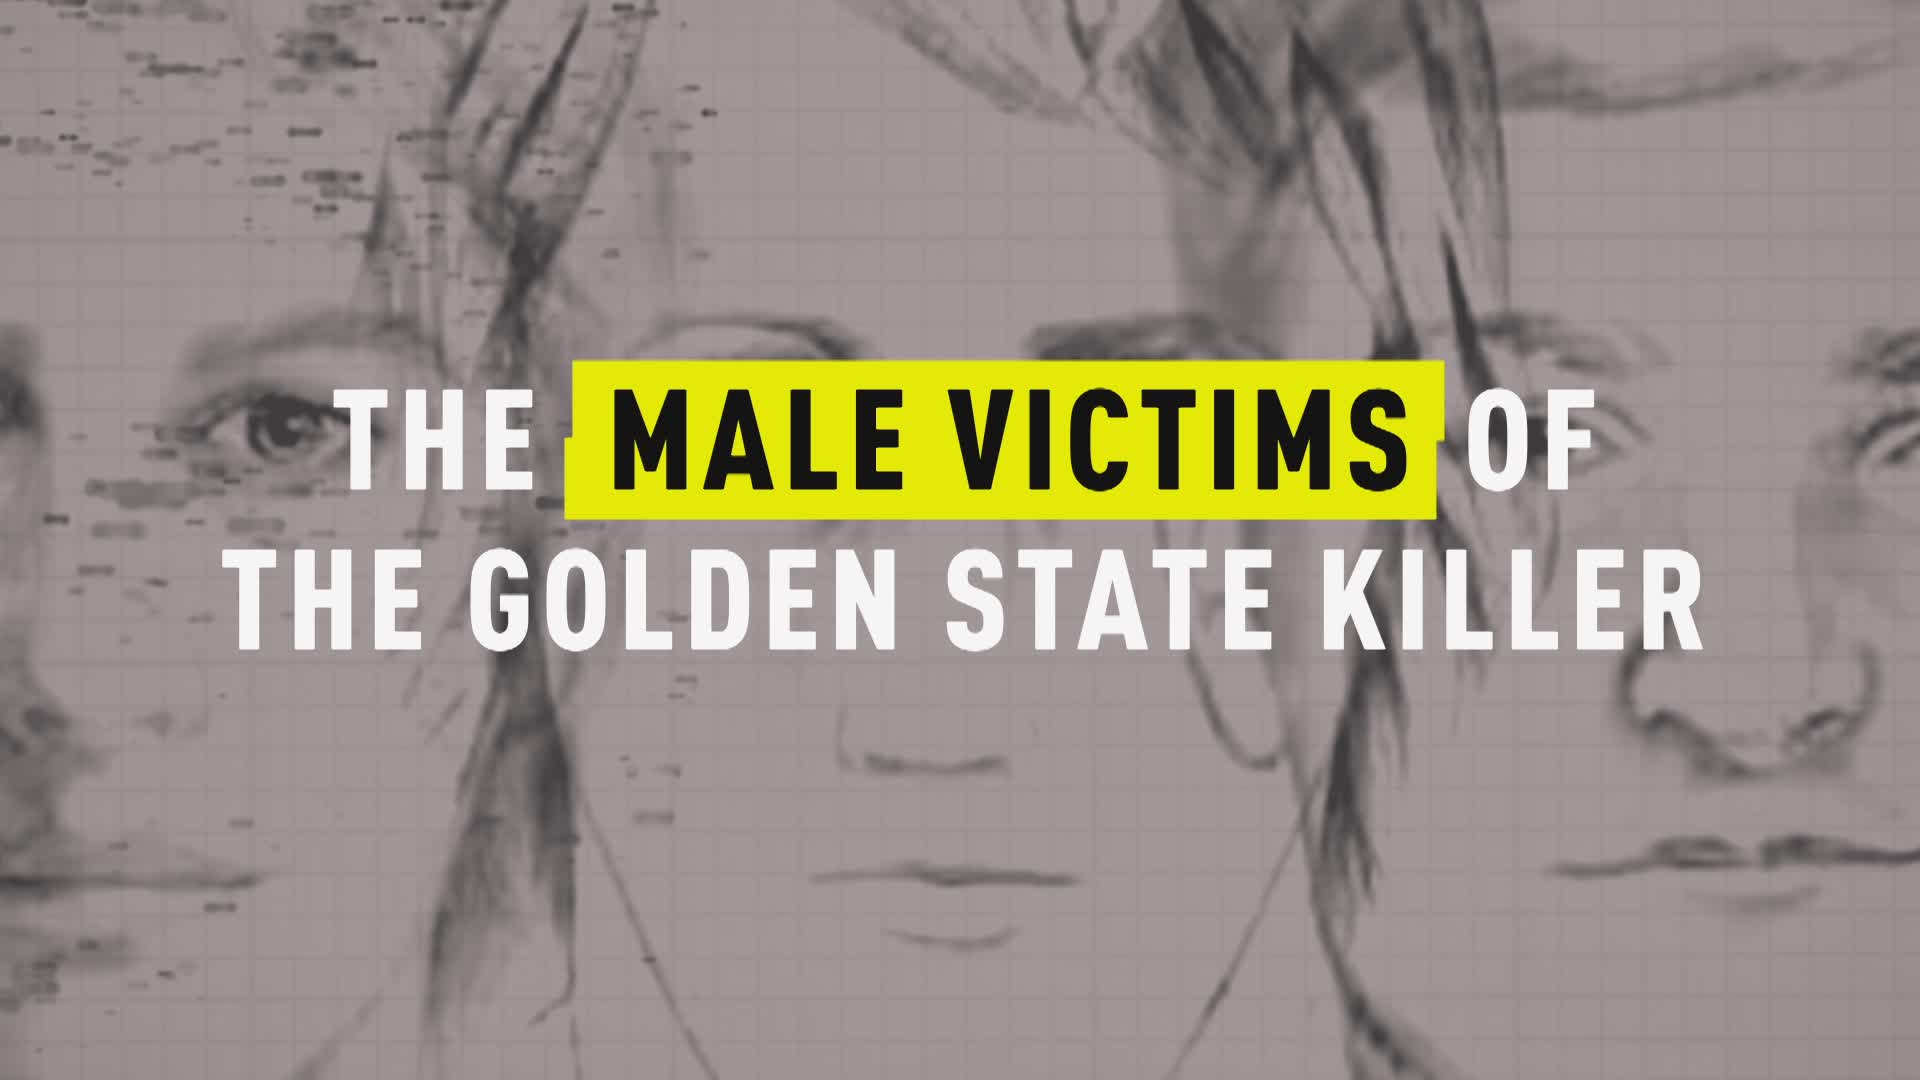 Golden State Killer Main Suspect: The Male Victims